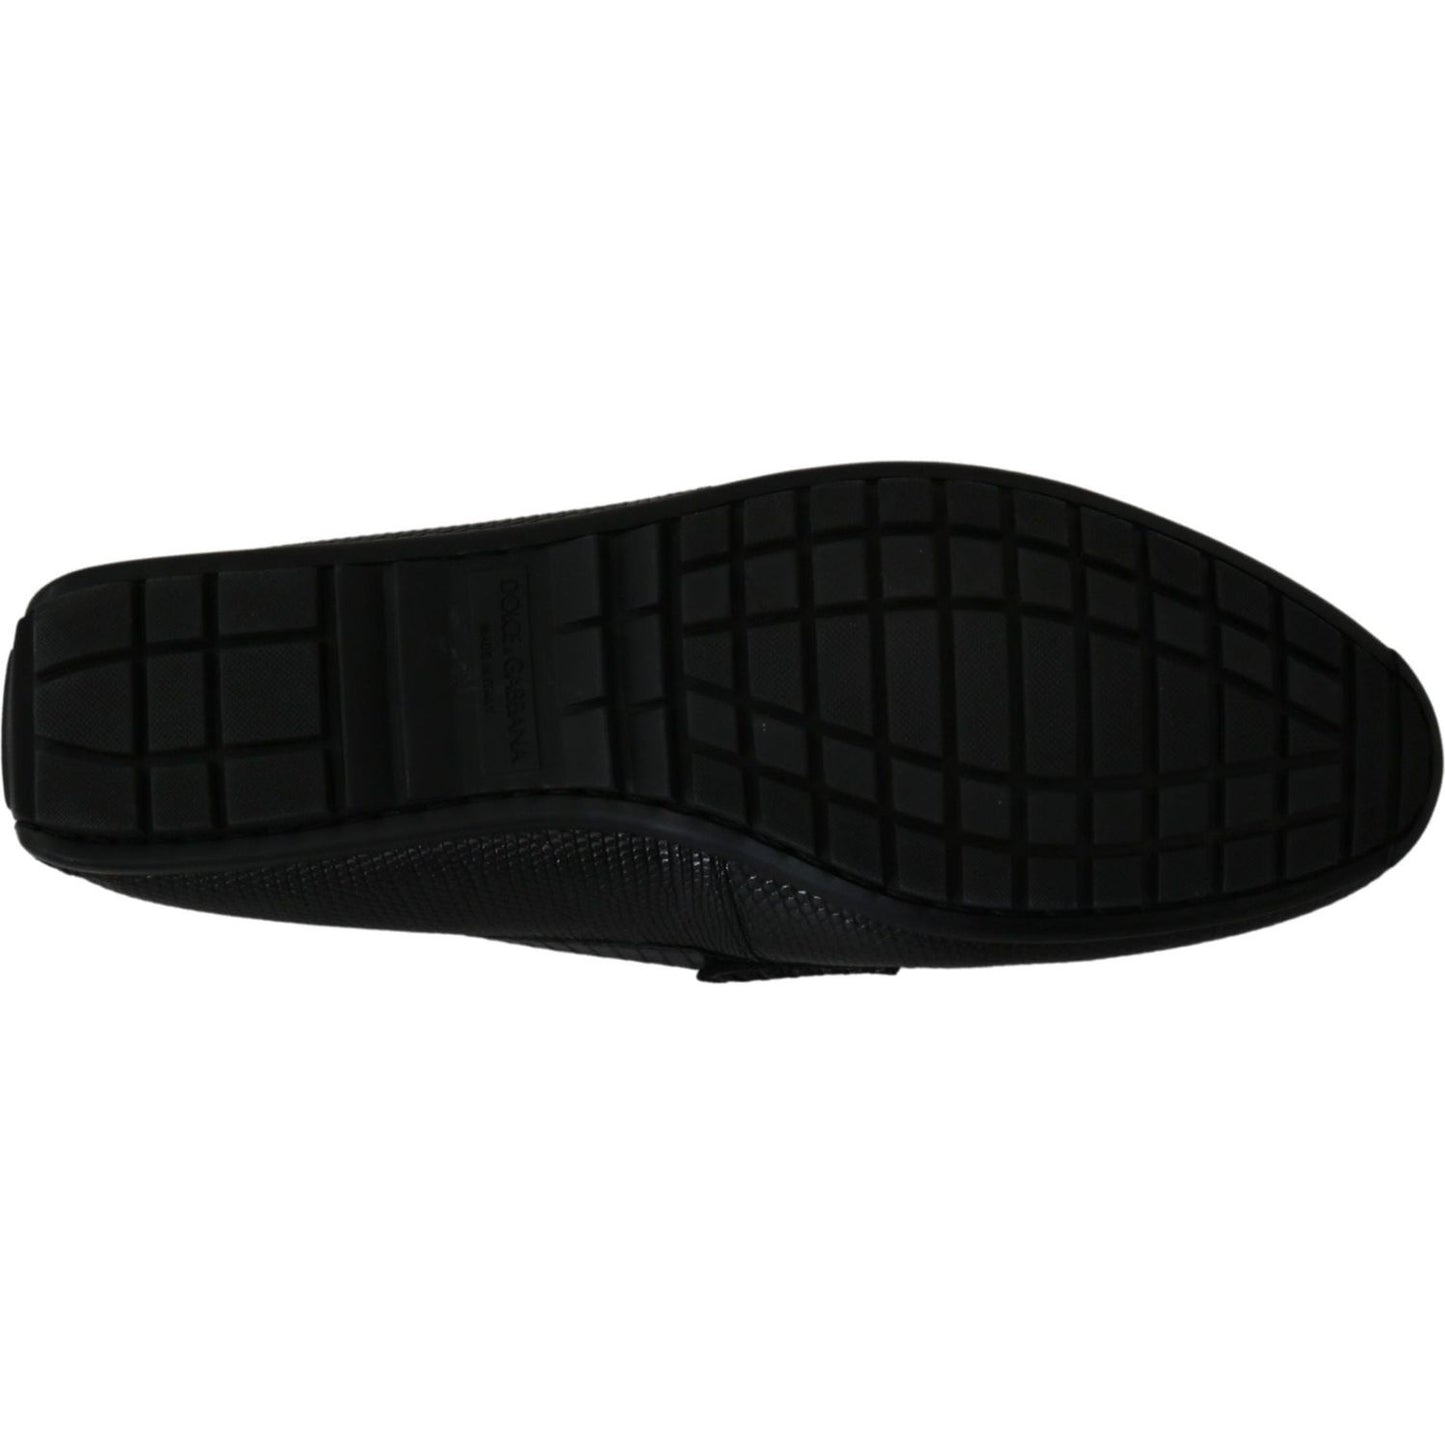 Dolce & Gabbana Exquisite Black Lizard Leather Loafers black-lizard-leather-flat-loafers-shoes